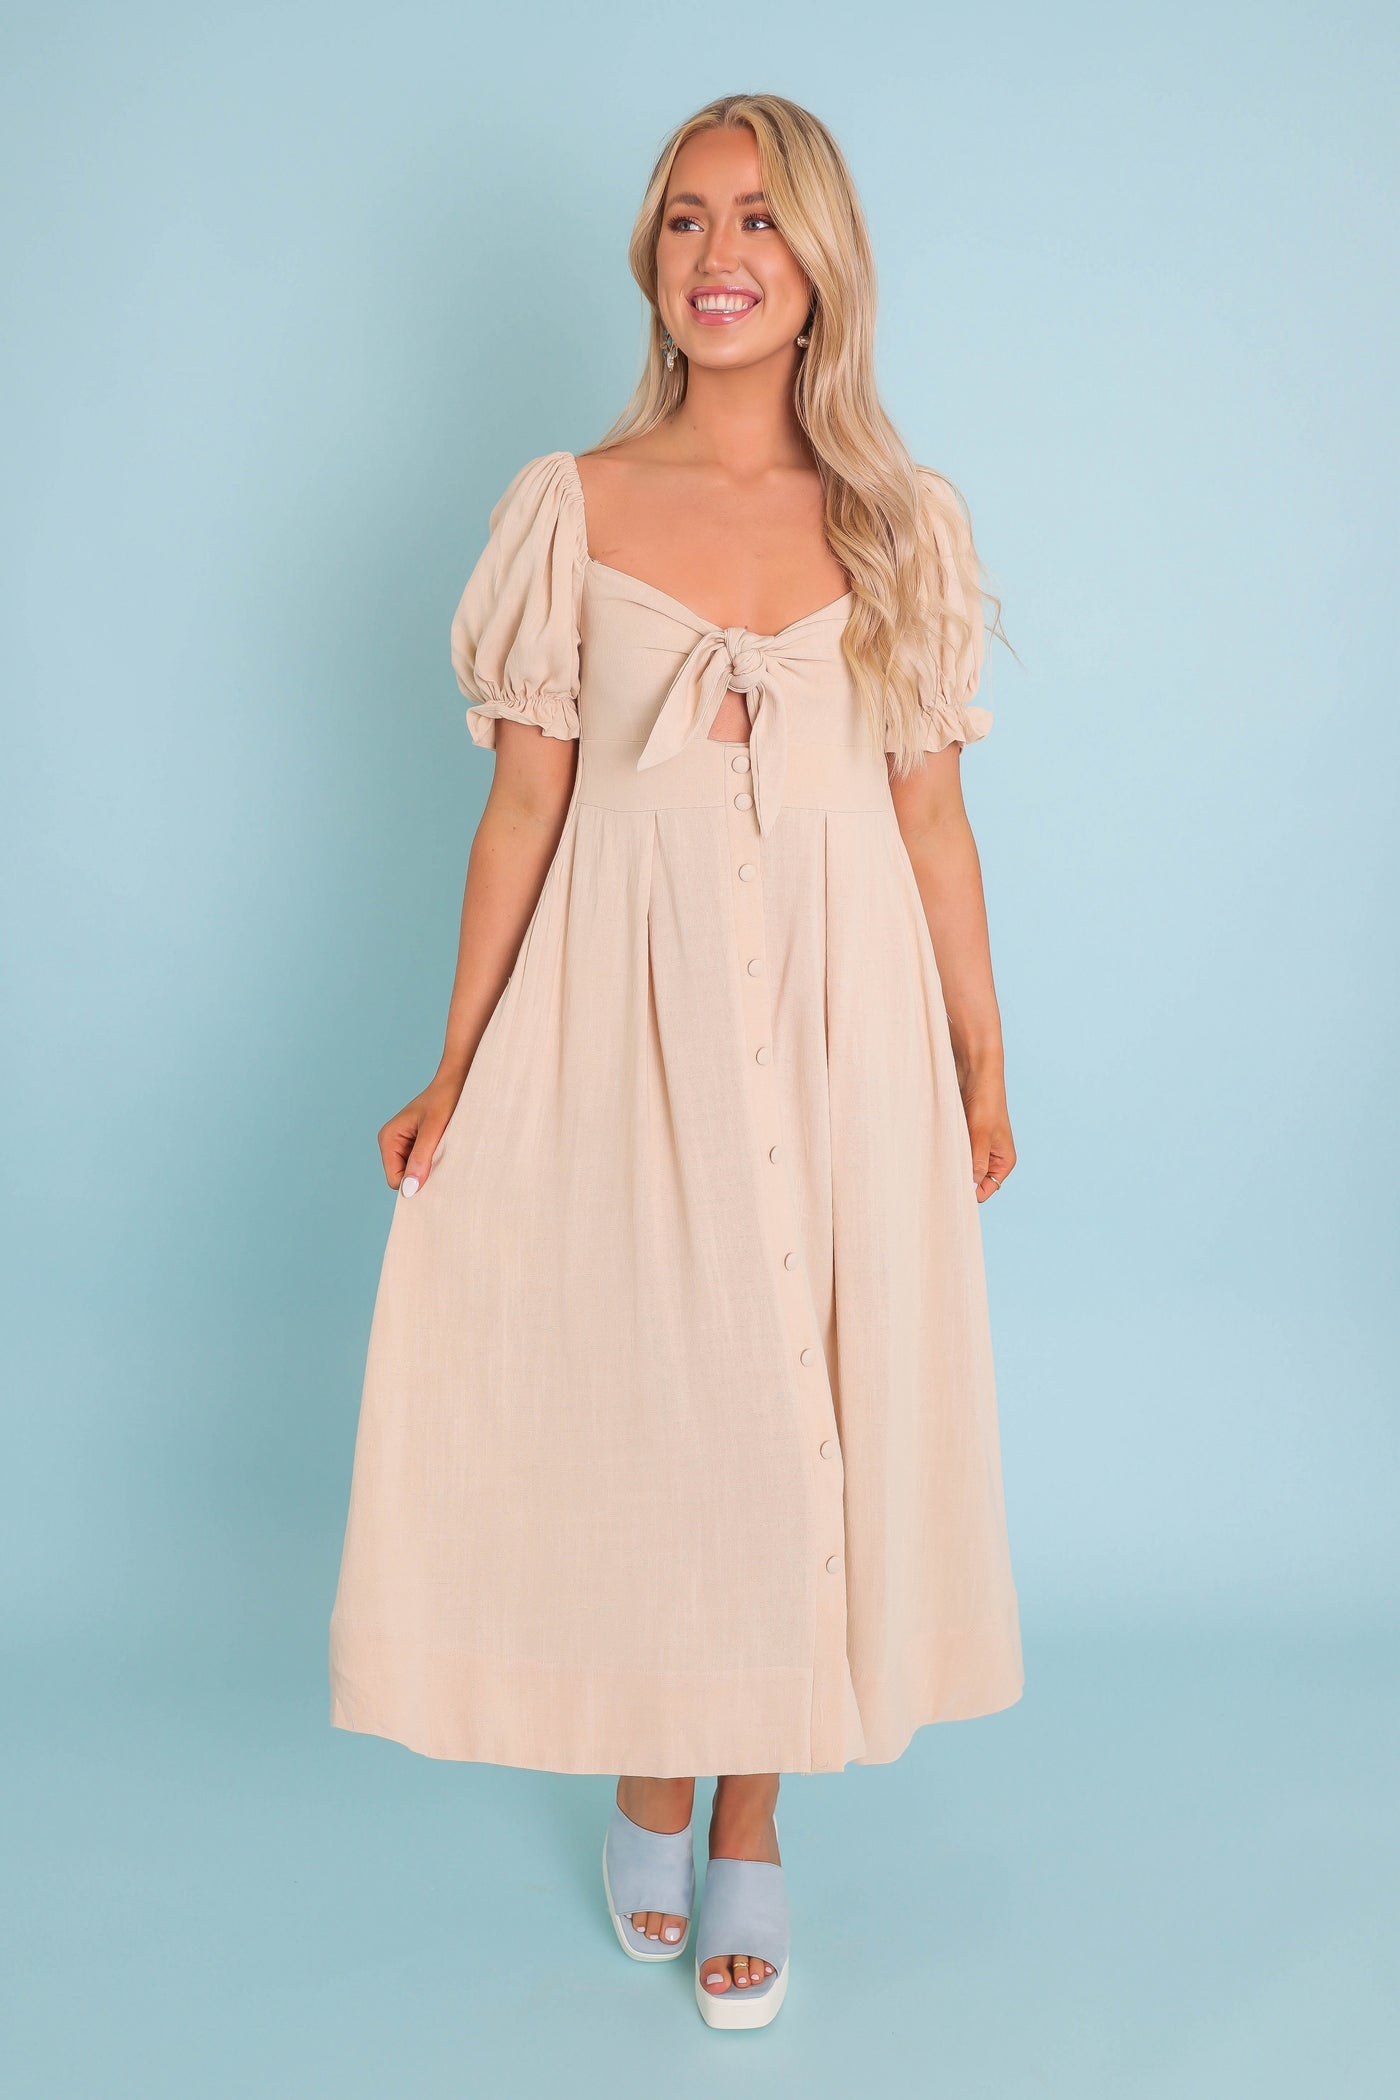 Women's Beige Linen Midi Dress- Pretty Summer Linen Dress- Mable Midi Dresses